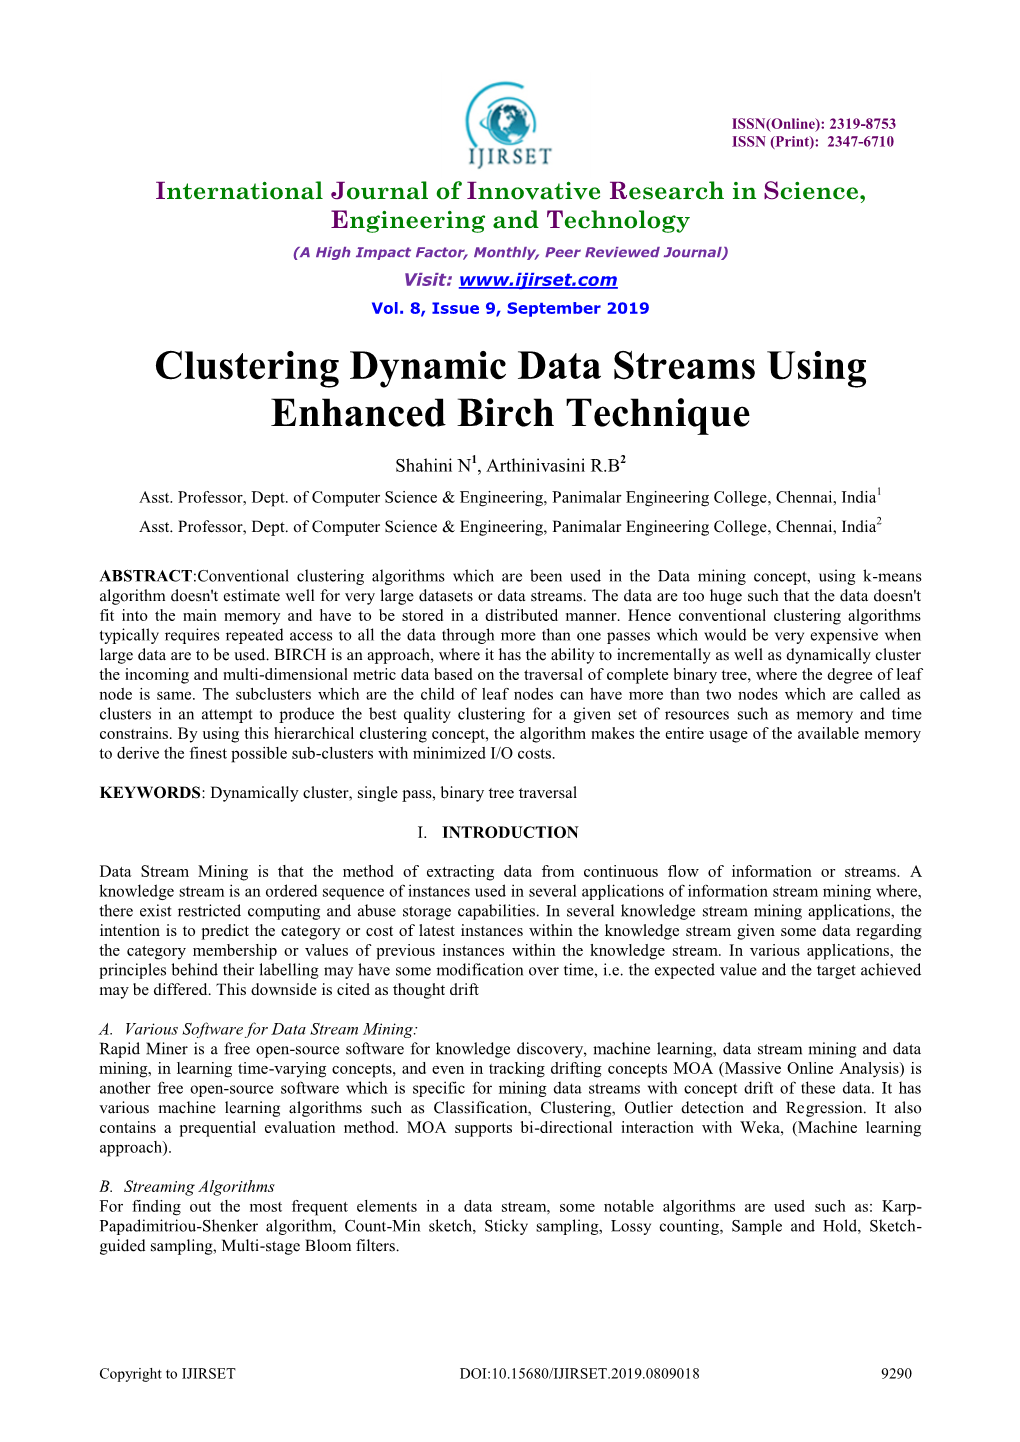 Clustering Dynamic Data Streams Using Enhanced Birch Technique